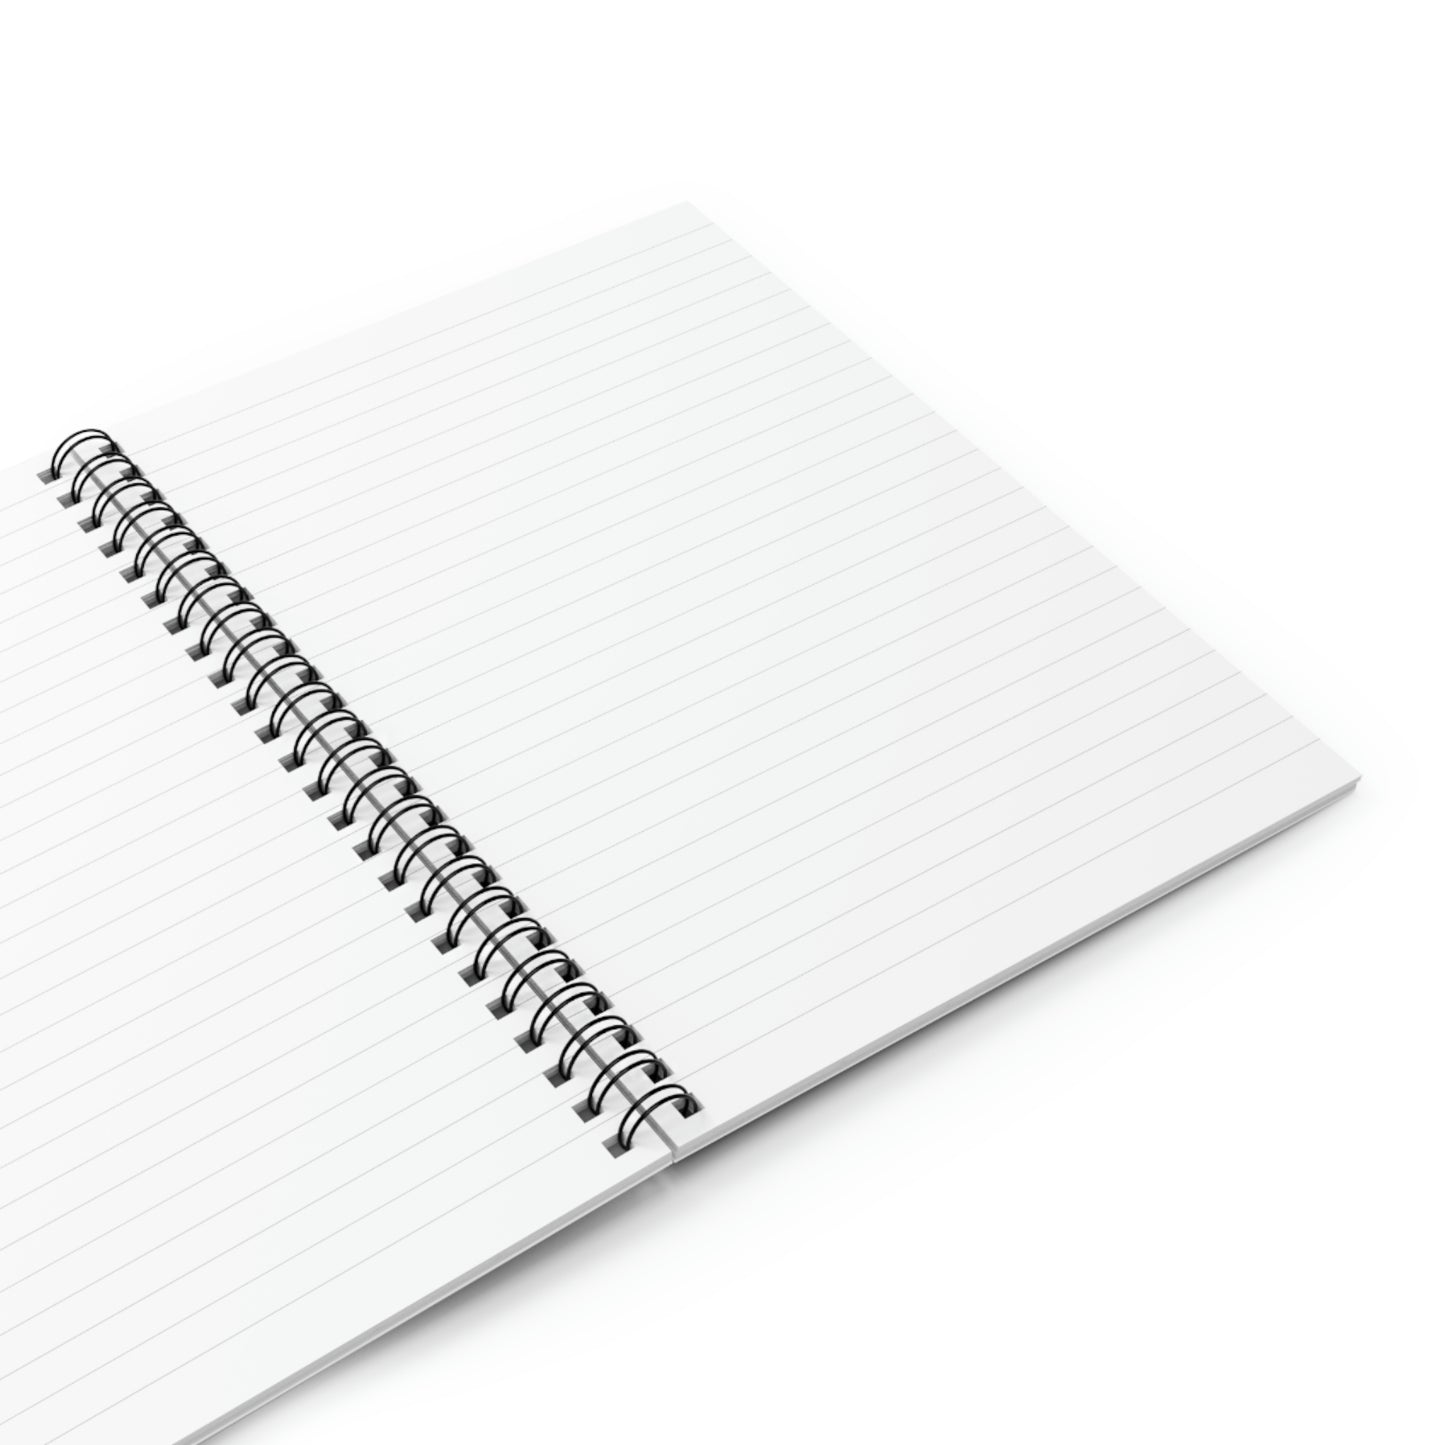 Zeta Phi Beta Spiral Notebook - Ruled Line